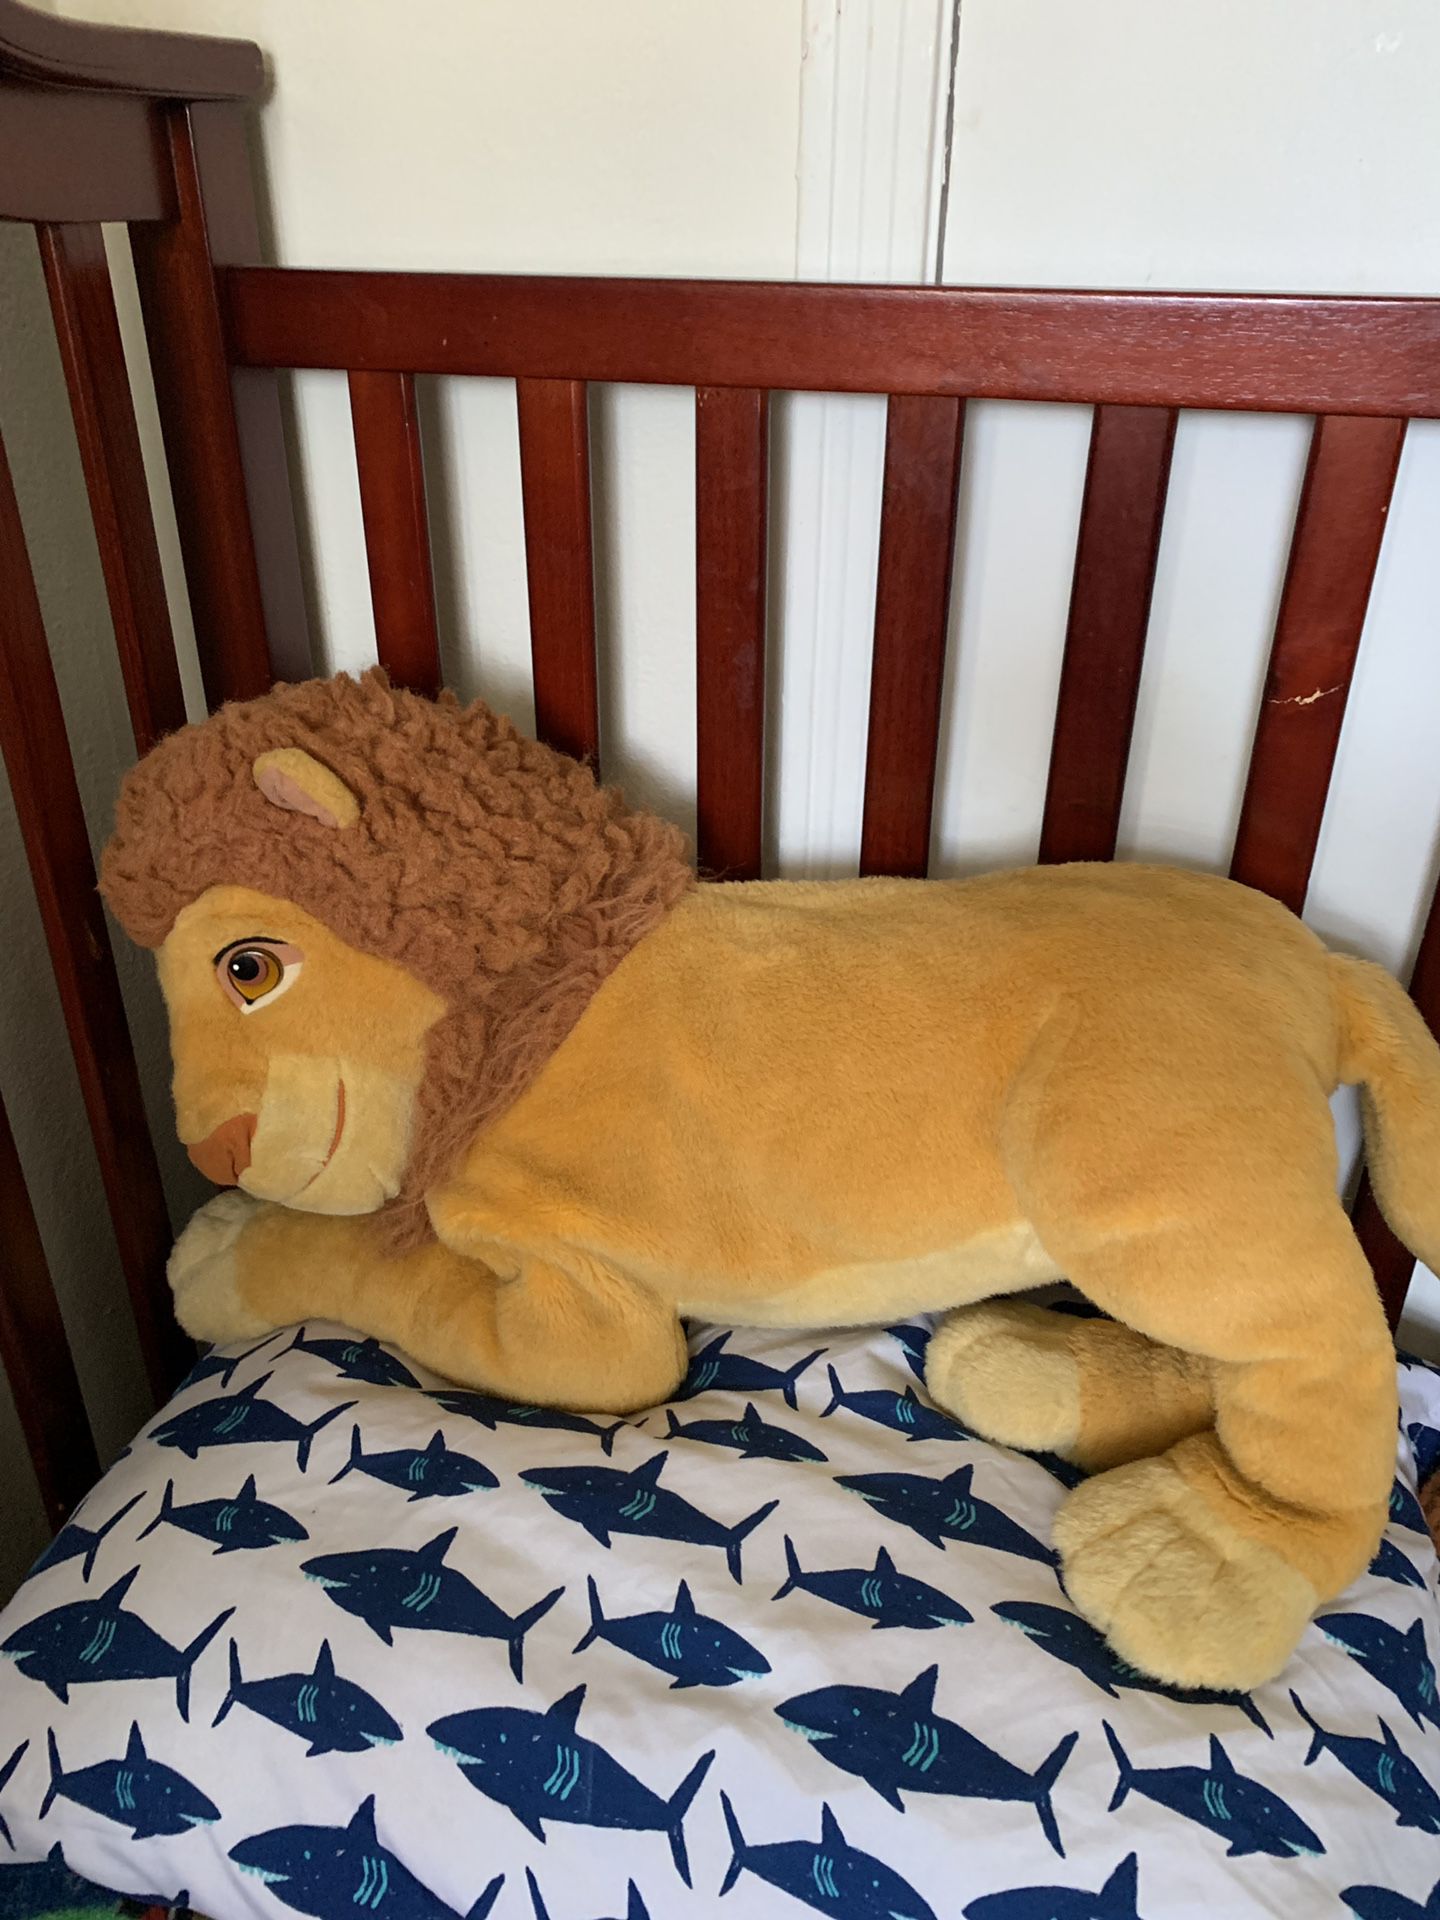 Lion king retro stuffed animal.